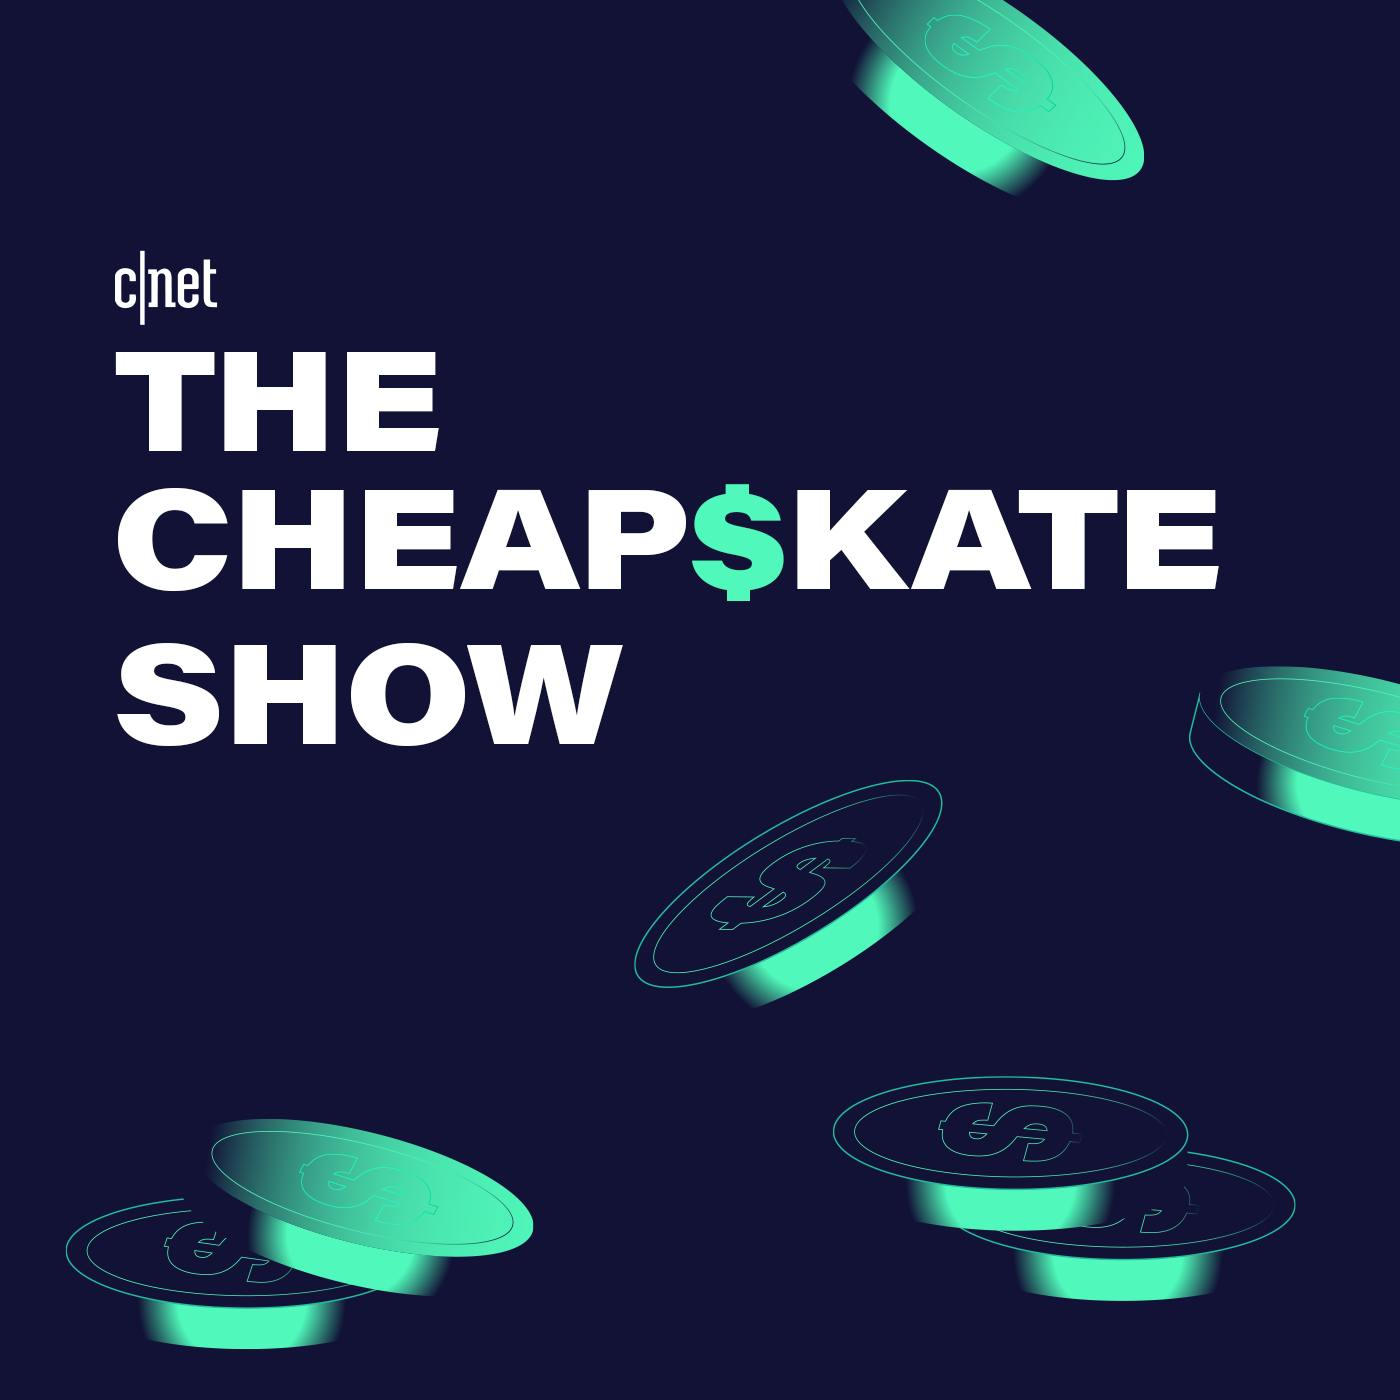 The Cheapskate Show